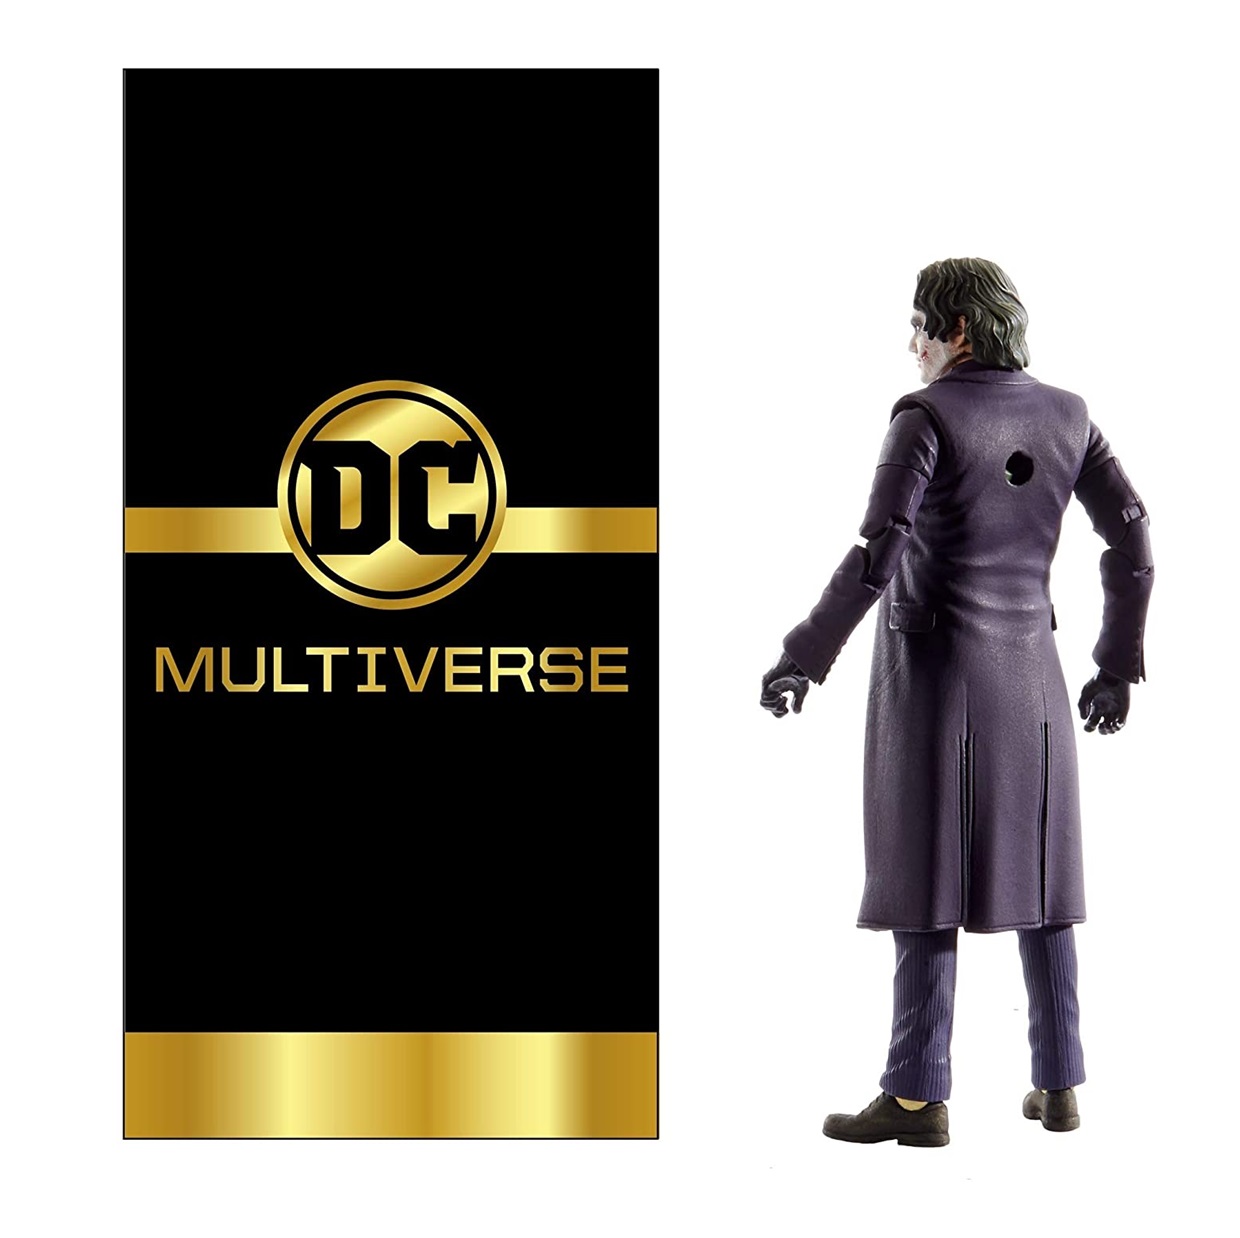 The Joker Figura The Dark Night Multiverse Mattel 6 Pulg